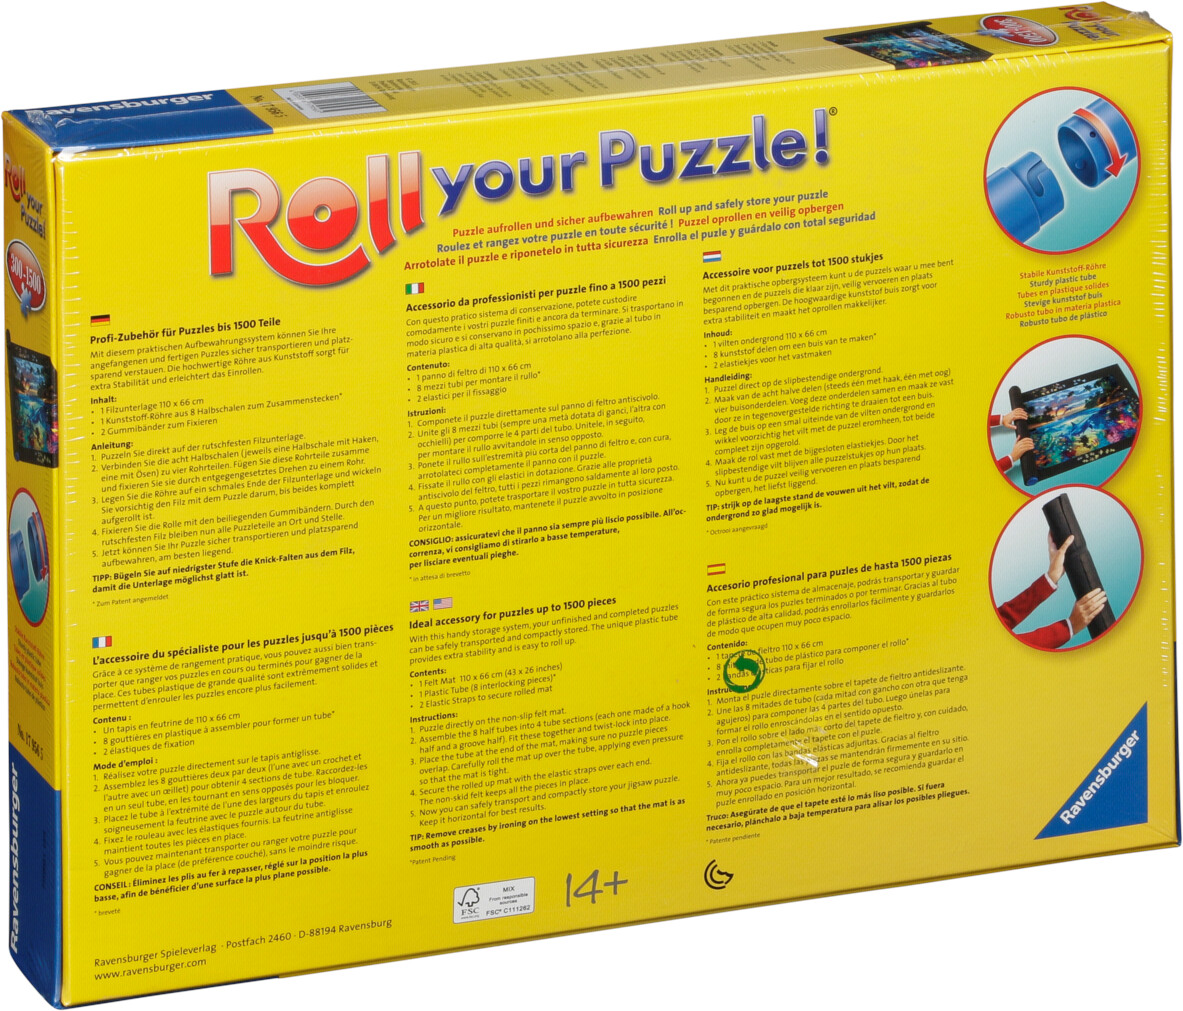 Ravensburger Roll your 11,98 Puzzle! | bei Preisvergleich ab €